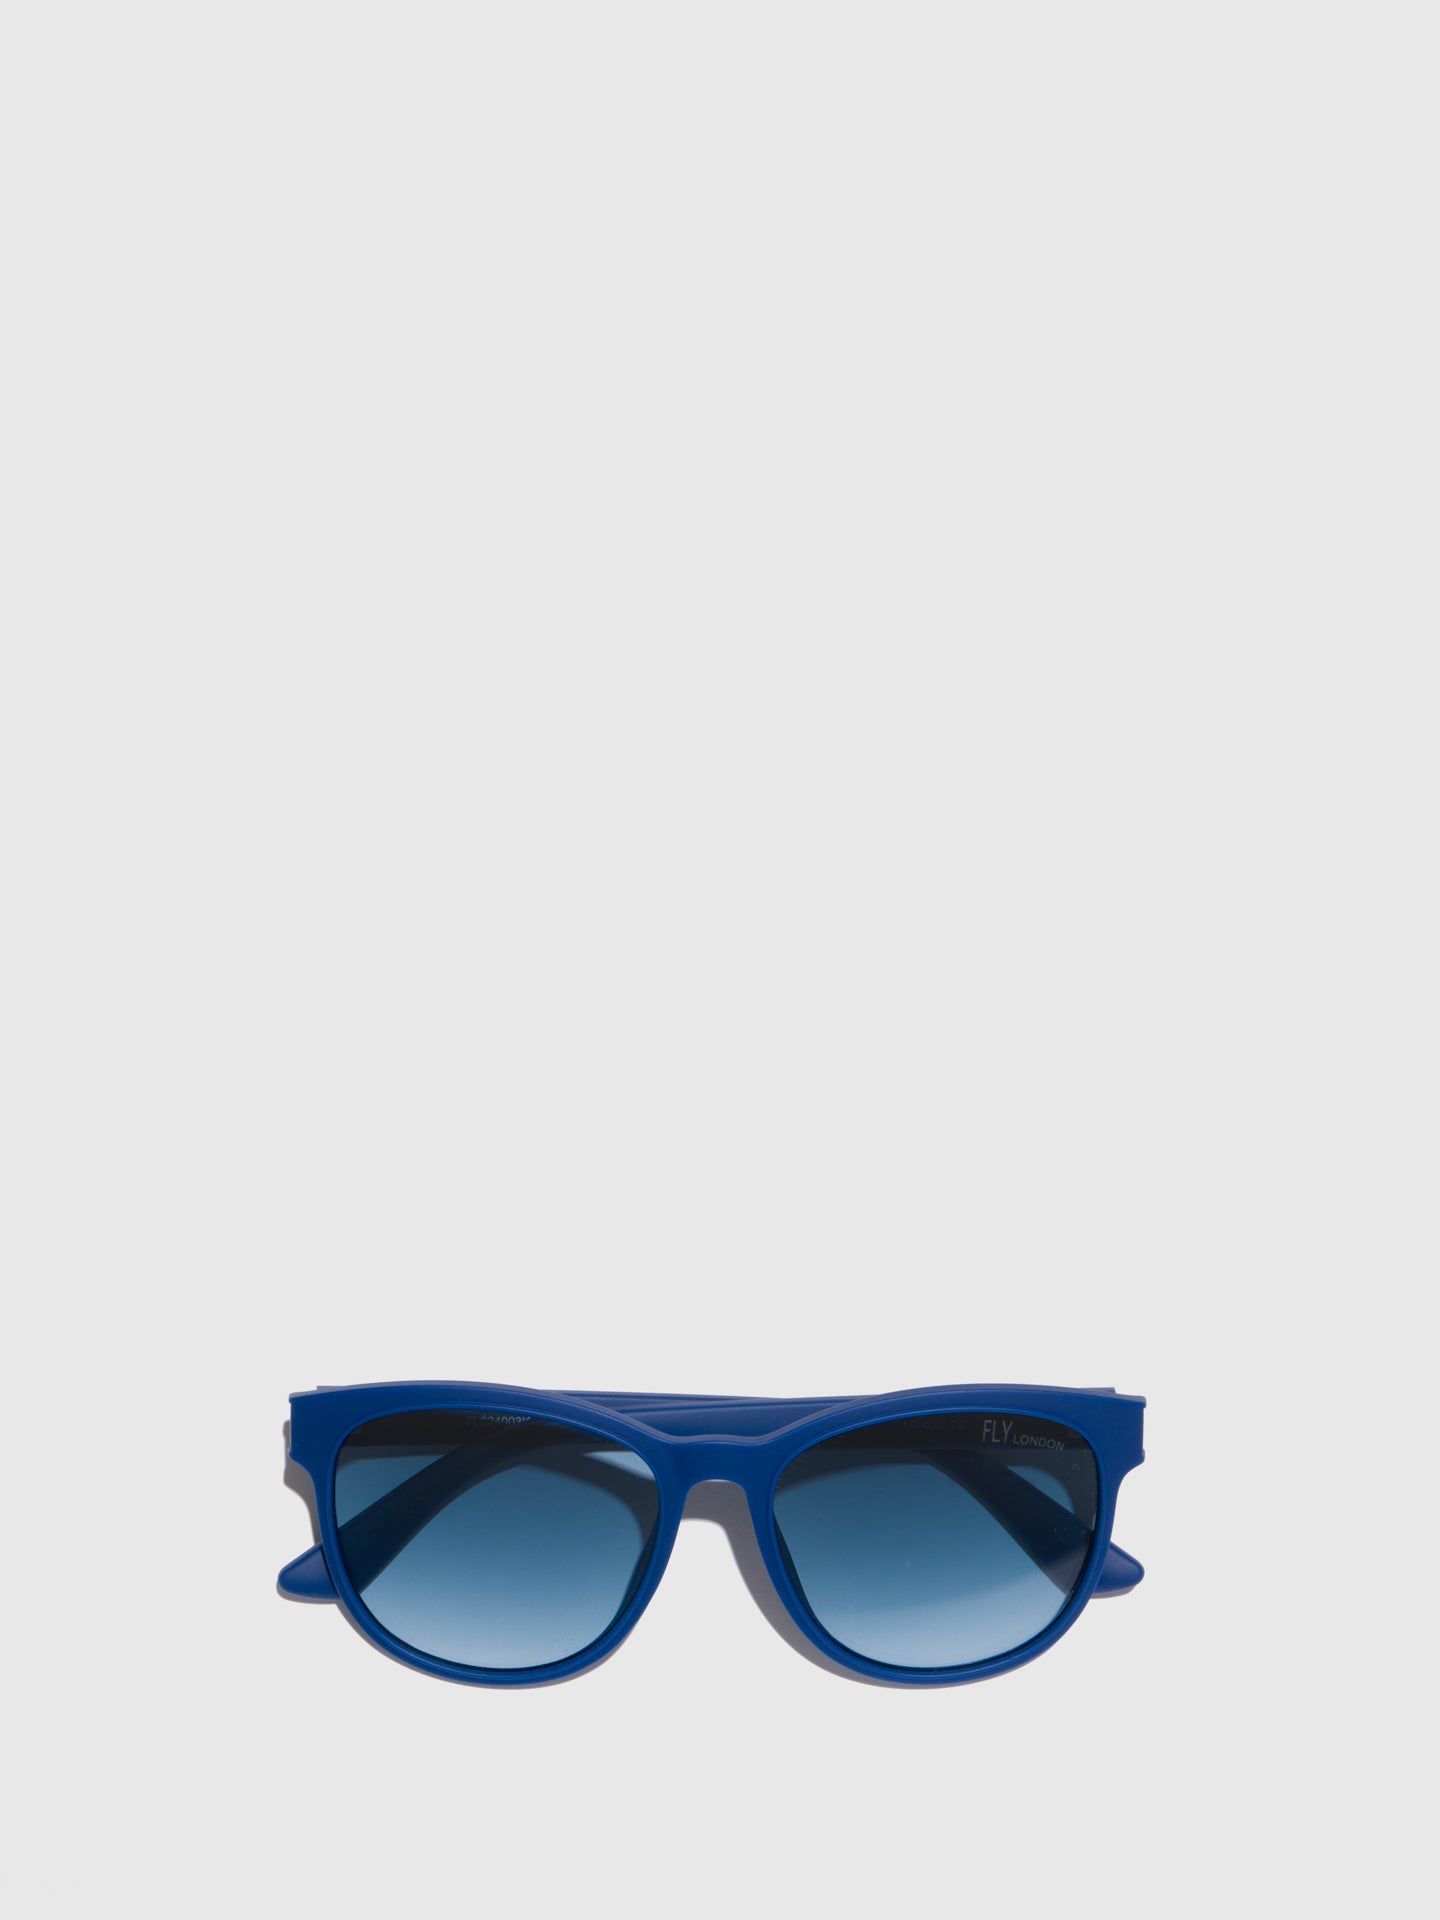 Fly London Blue Wayfarer Style Sunglasses